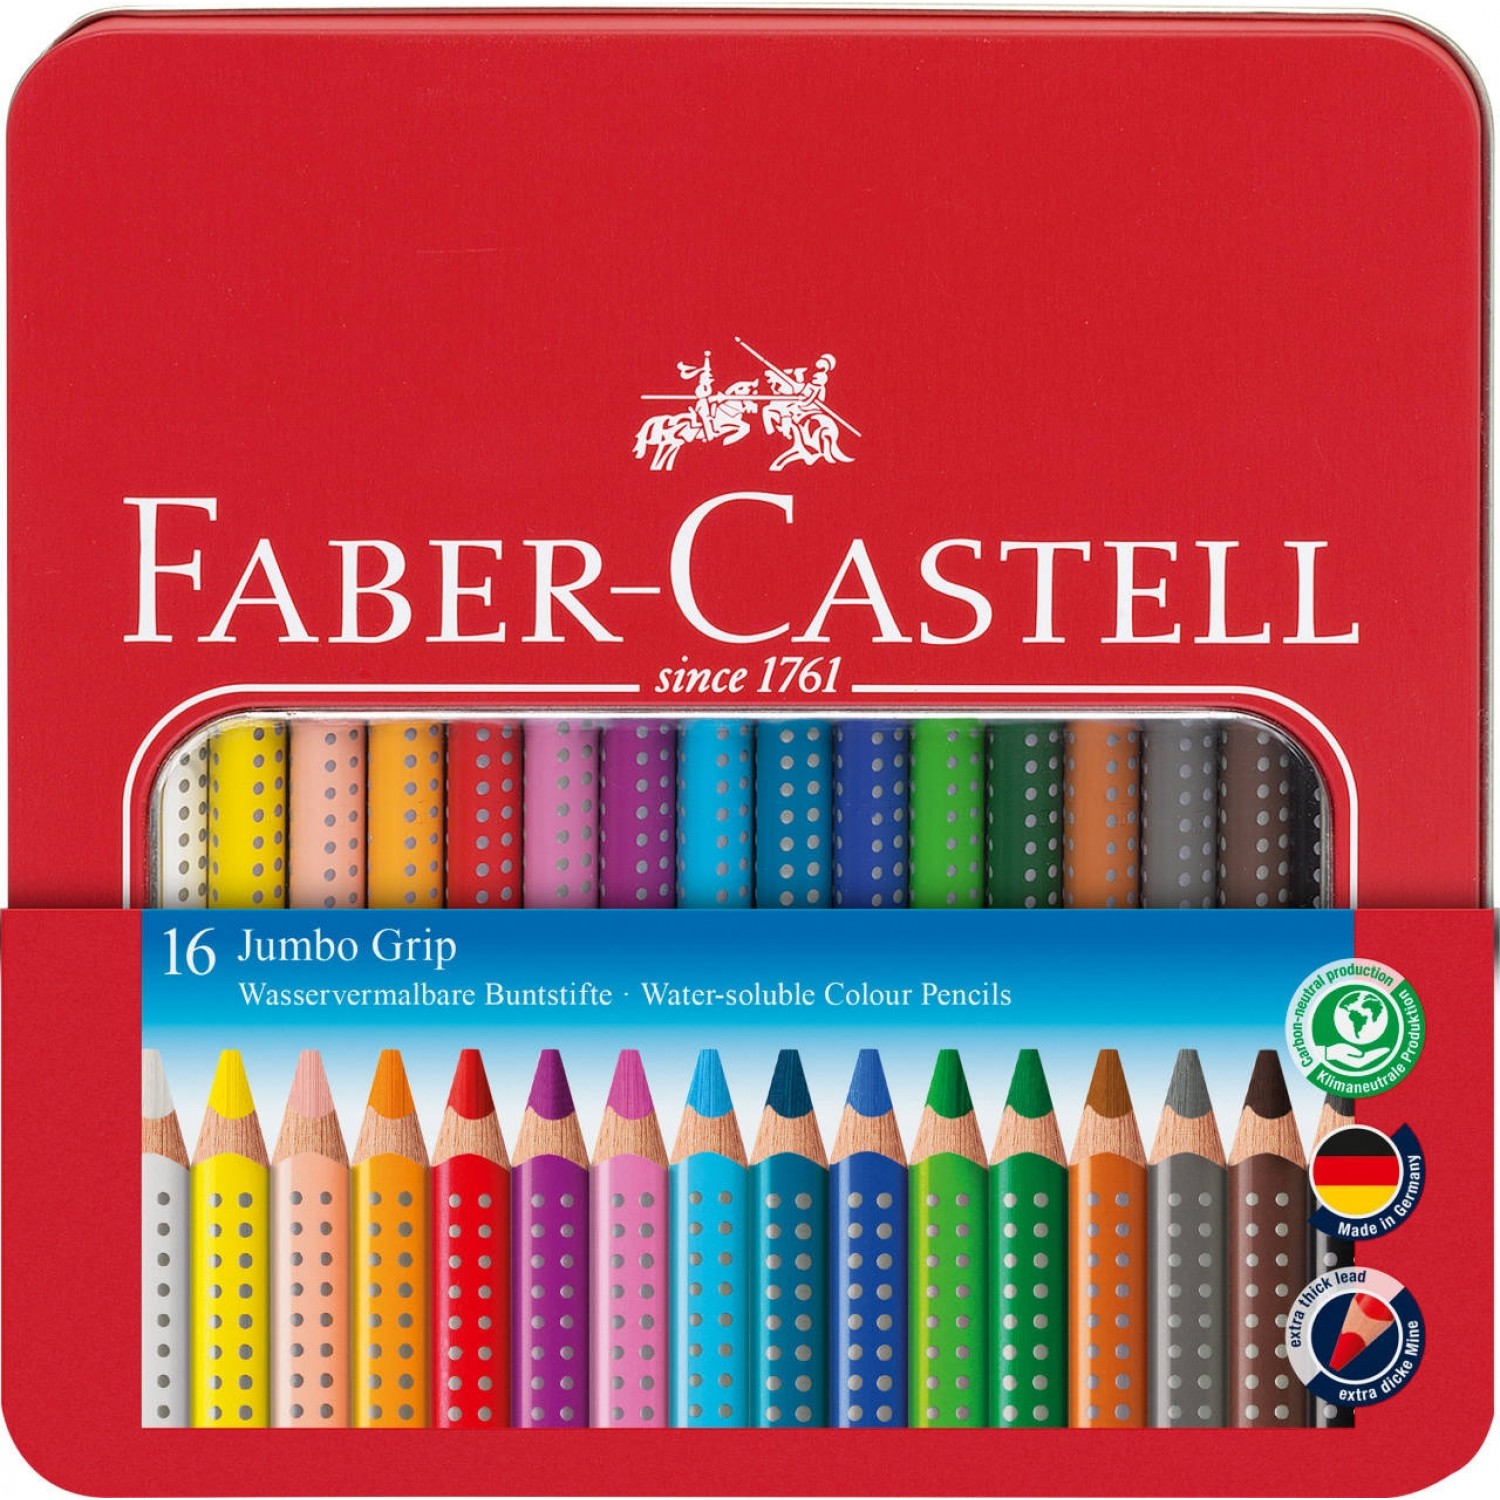 Faber-Castell Jumbo Grip Buntstift 16er Metalletui